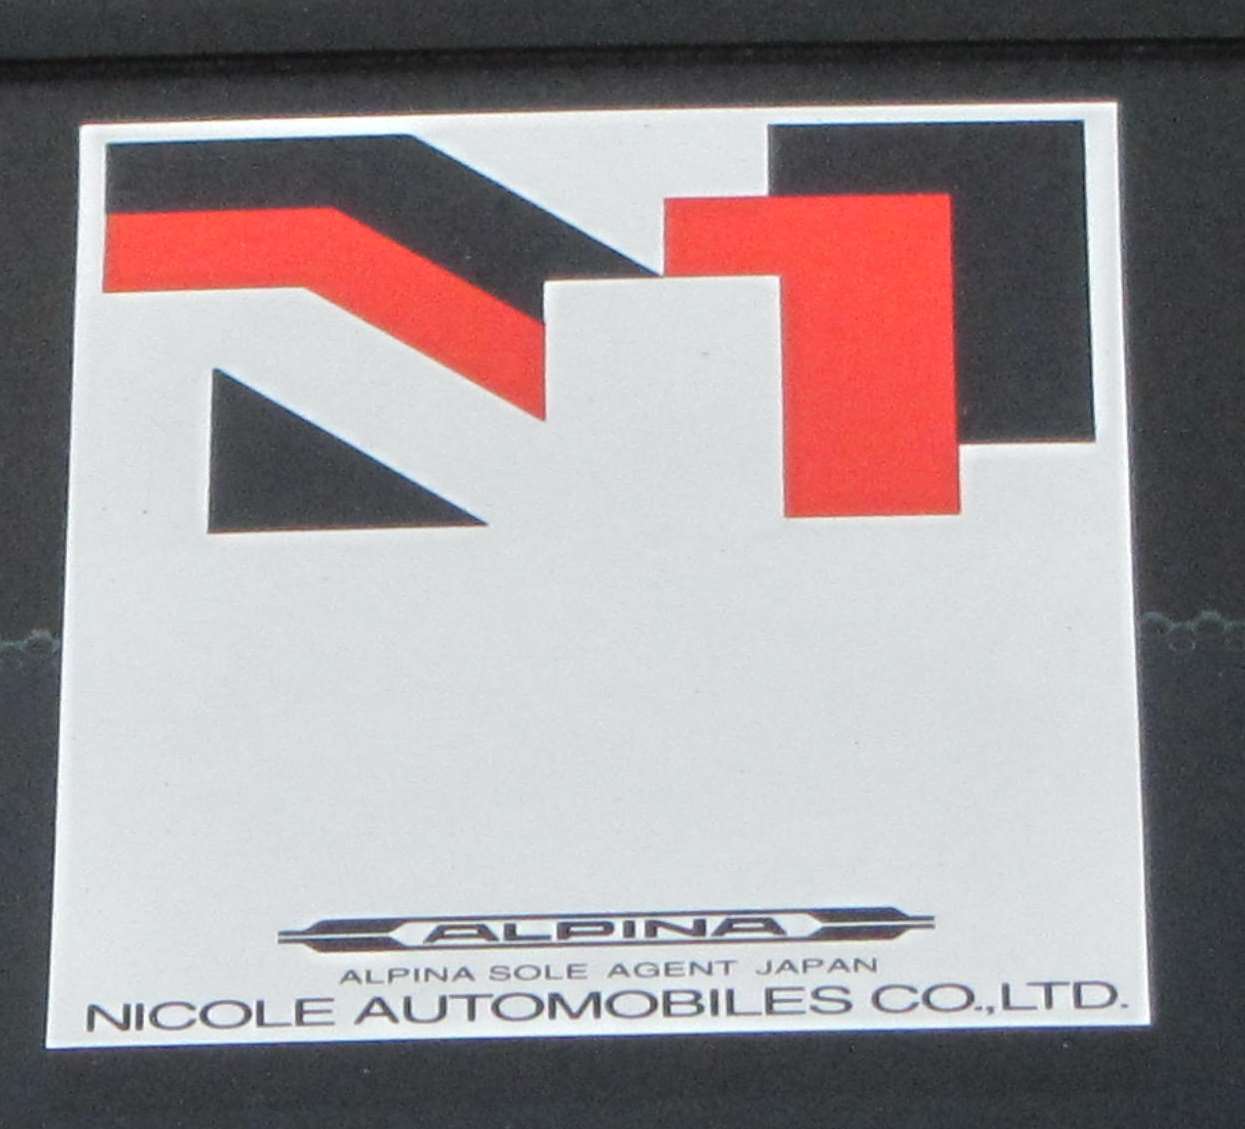 Nicole Racing Japan Co. Ltd.